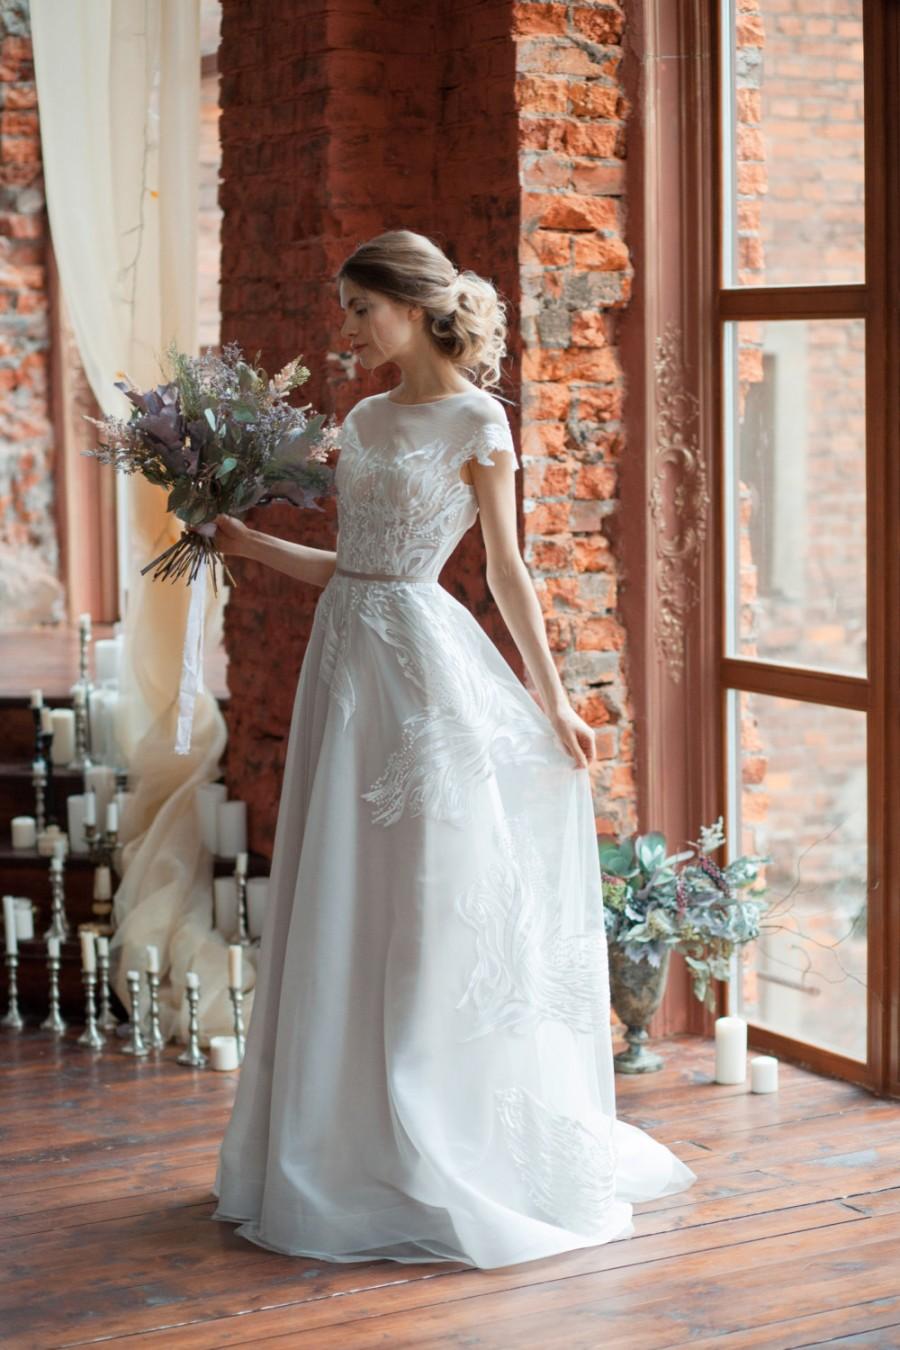 Hochzeit - Lora / A-line wedding dress / Boned / Open back wedding dress / Covered shoulders / Short train